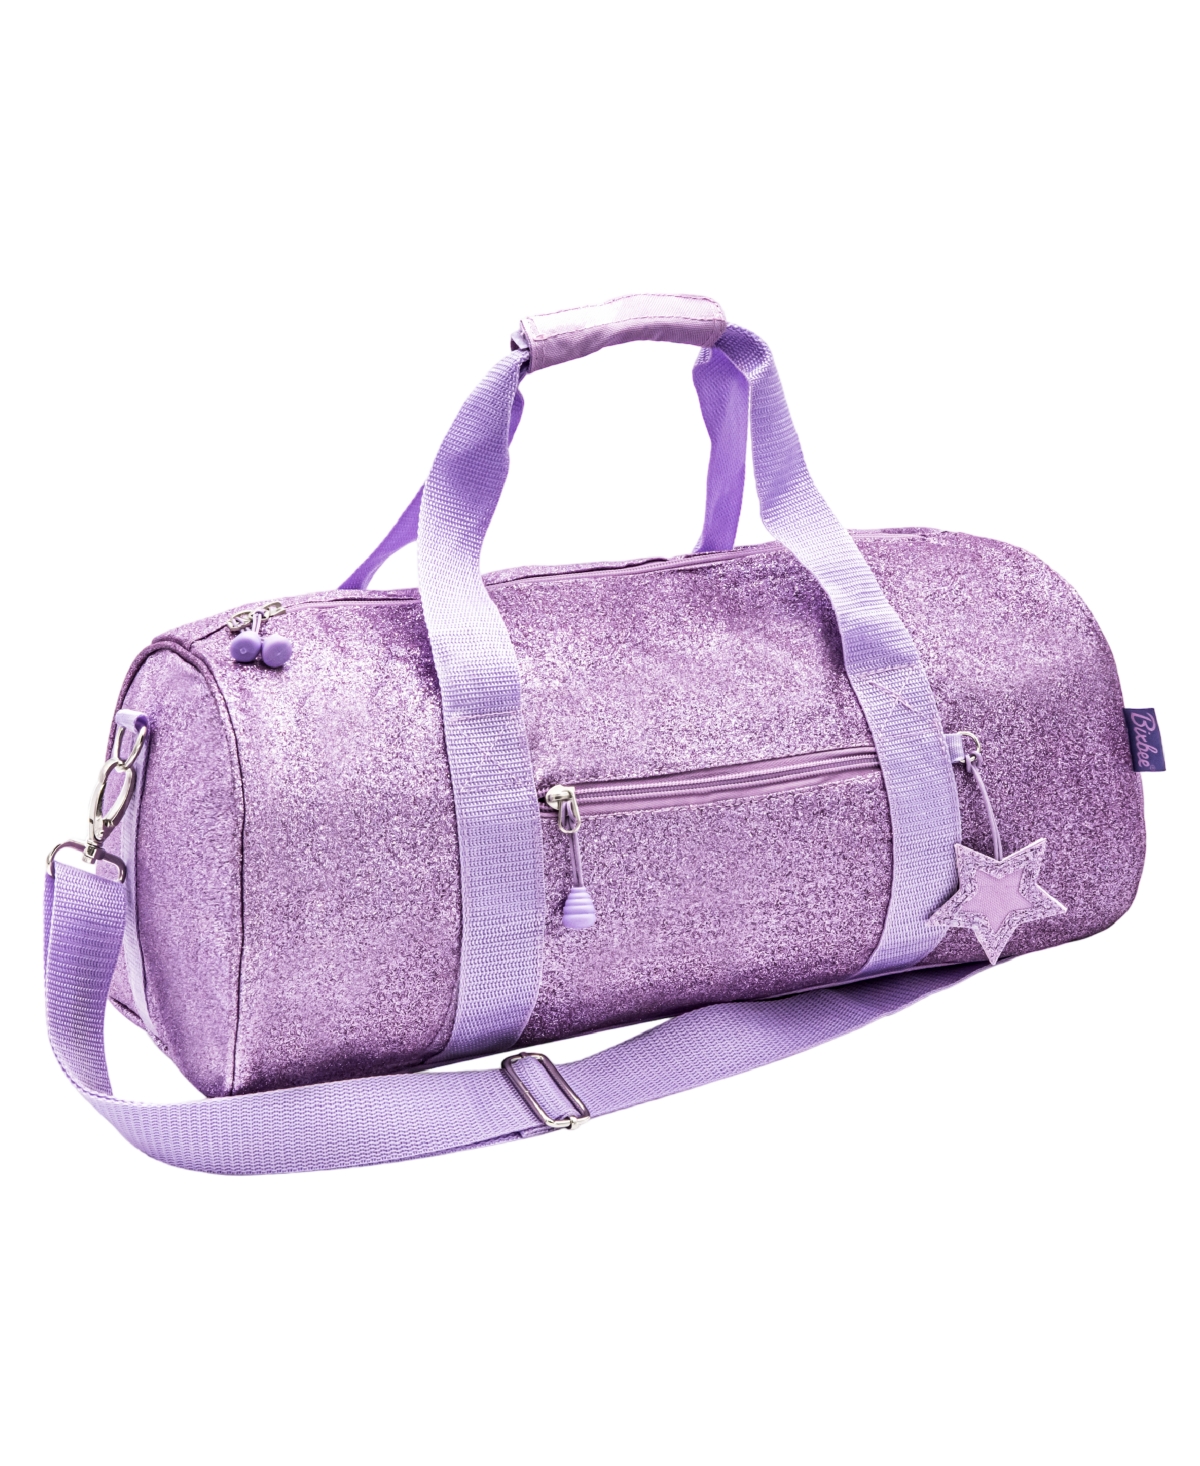 Sparkalicious Purple Duffle Bag - Purple